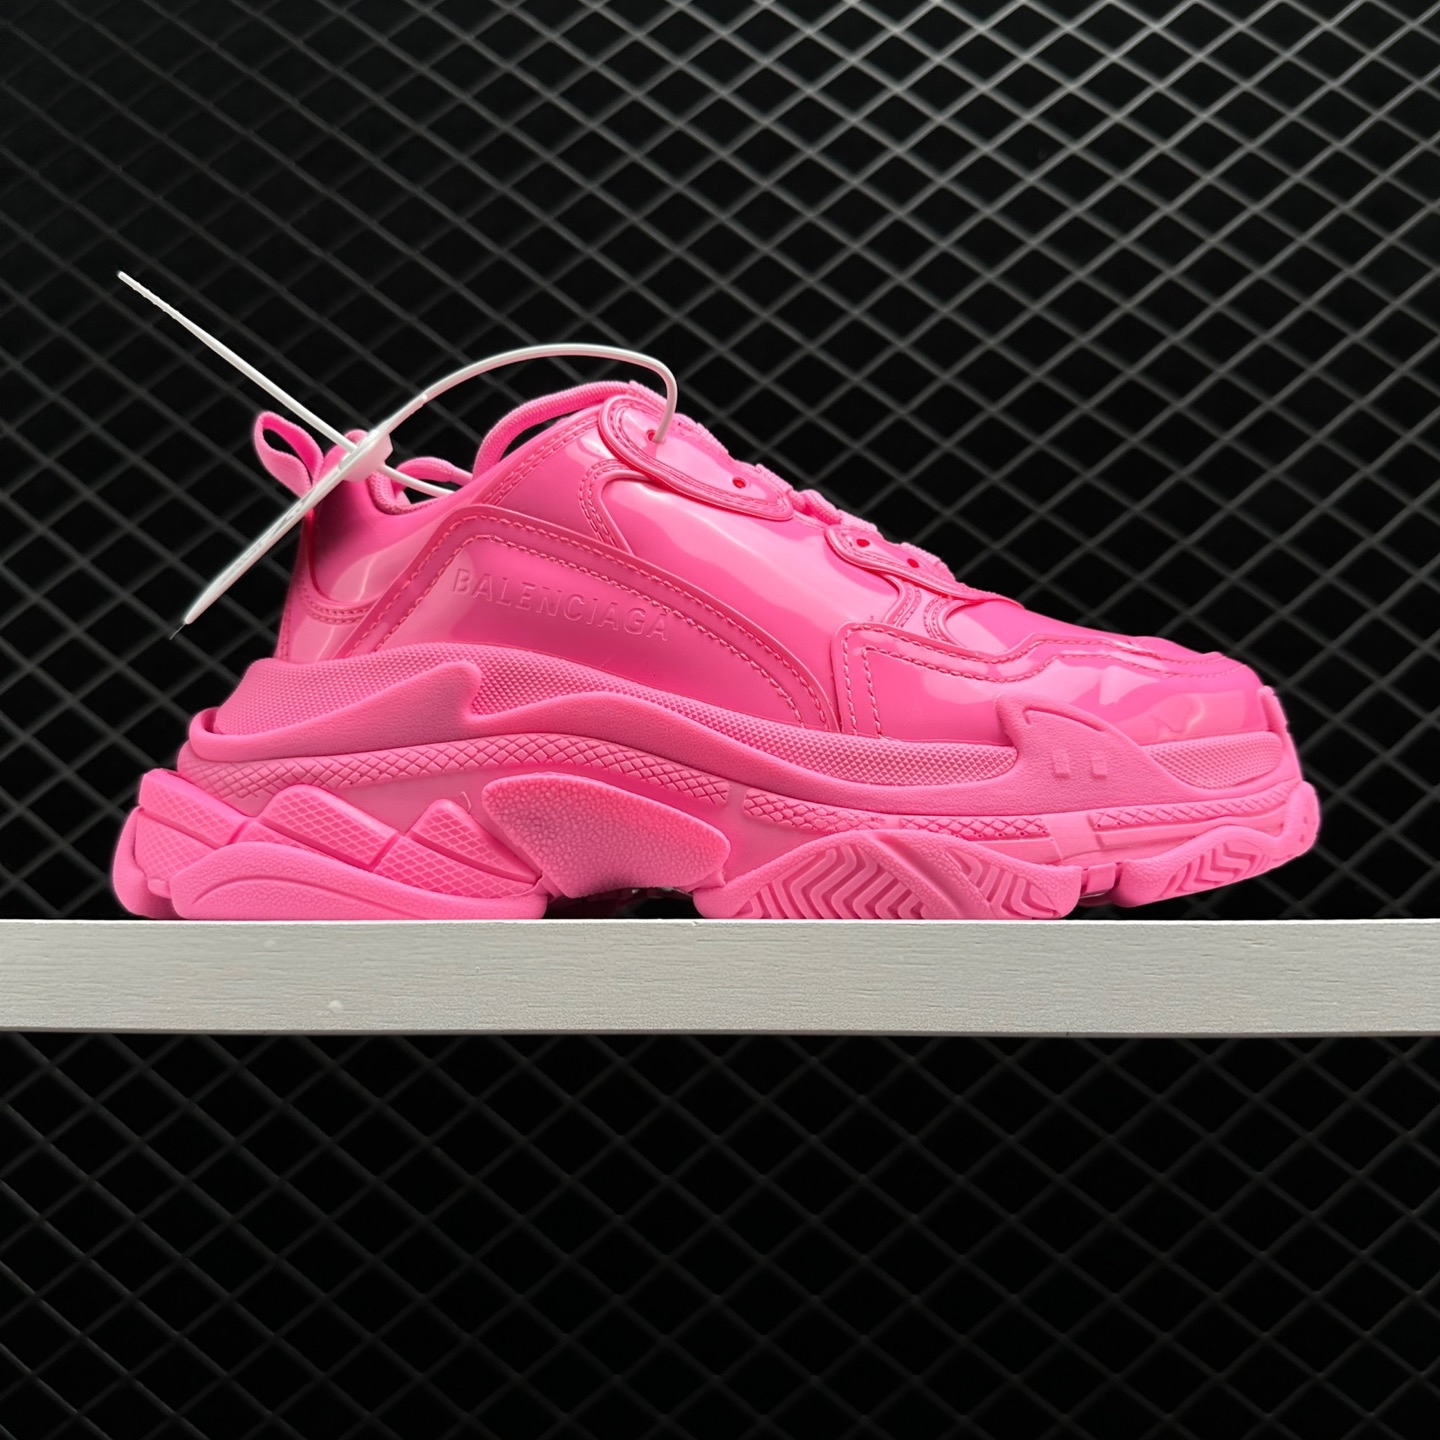 Premium Balenciaga Triple S Sneaker in Pink 734953W2PAA5000 – Get the Latest Stylish Footwear Now!